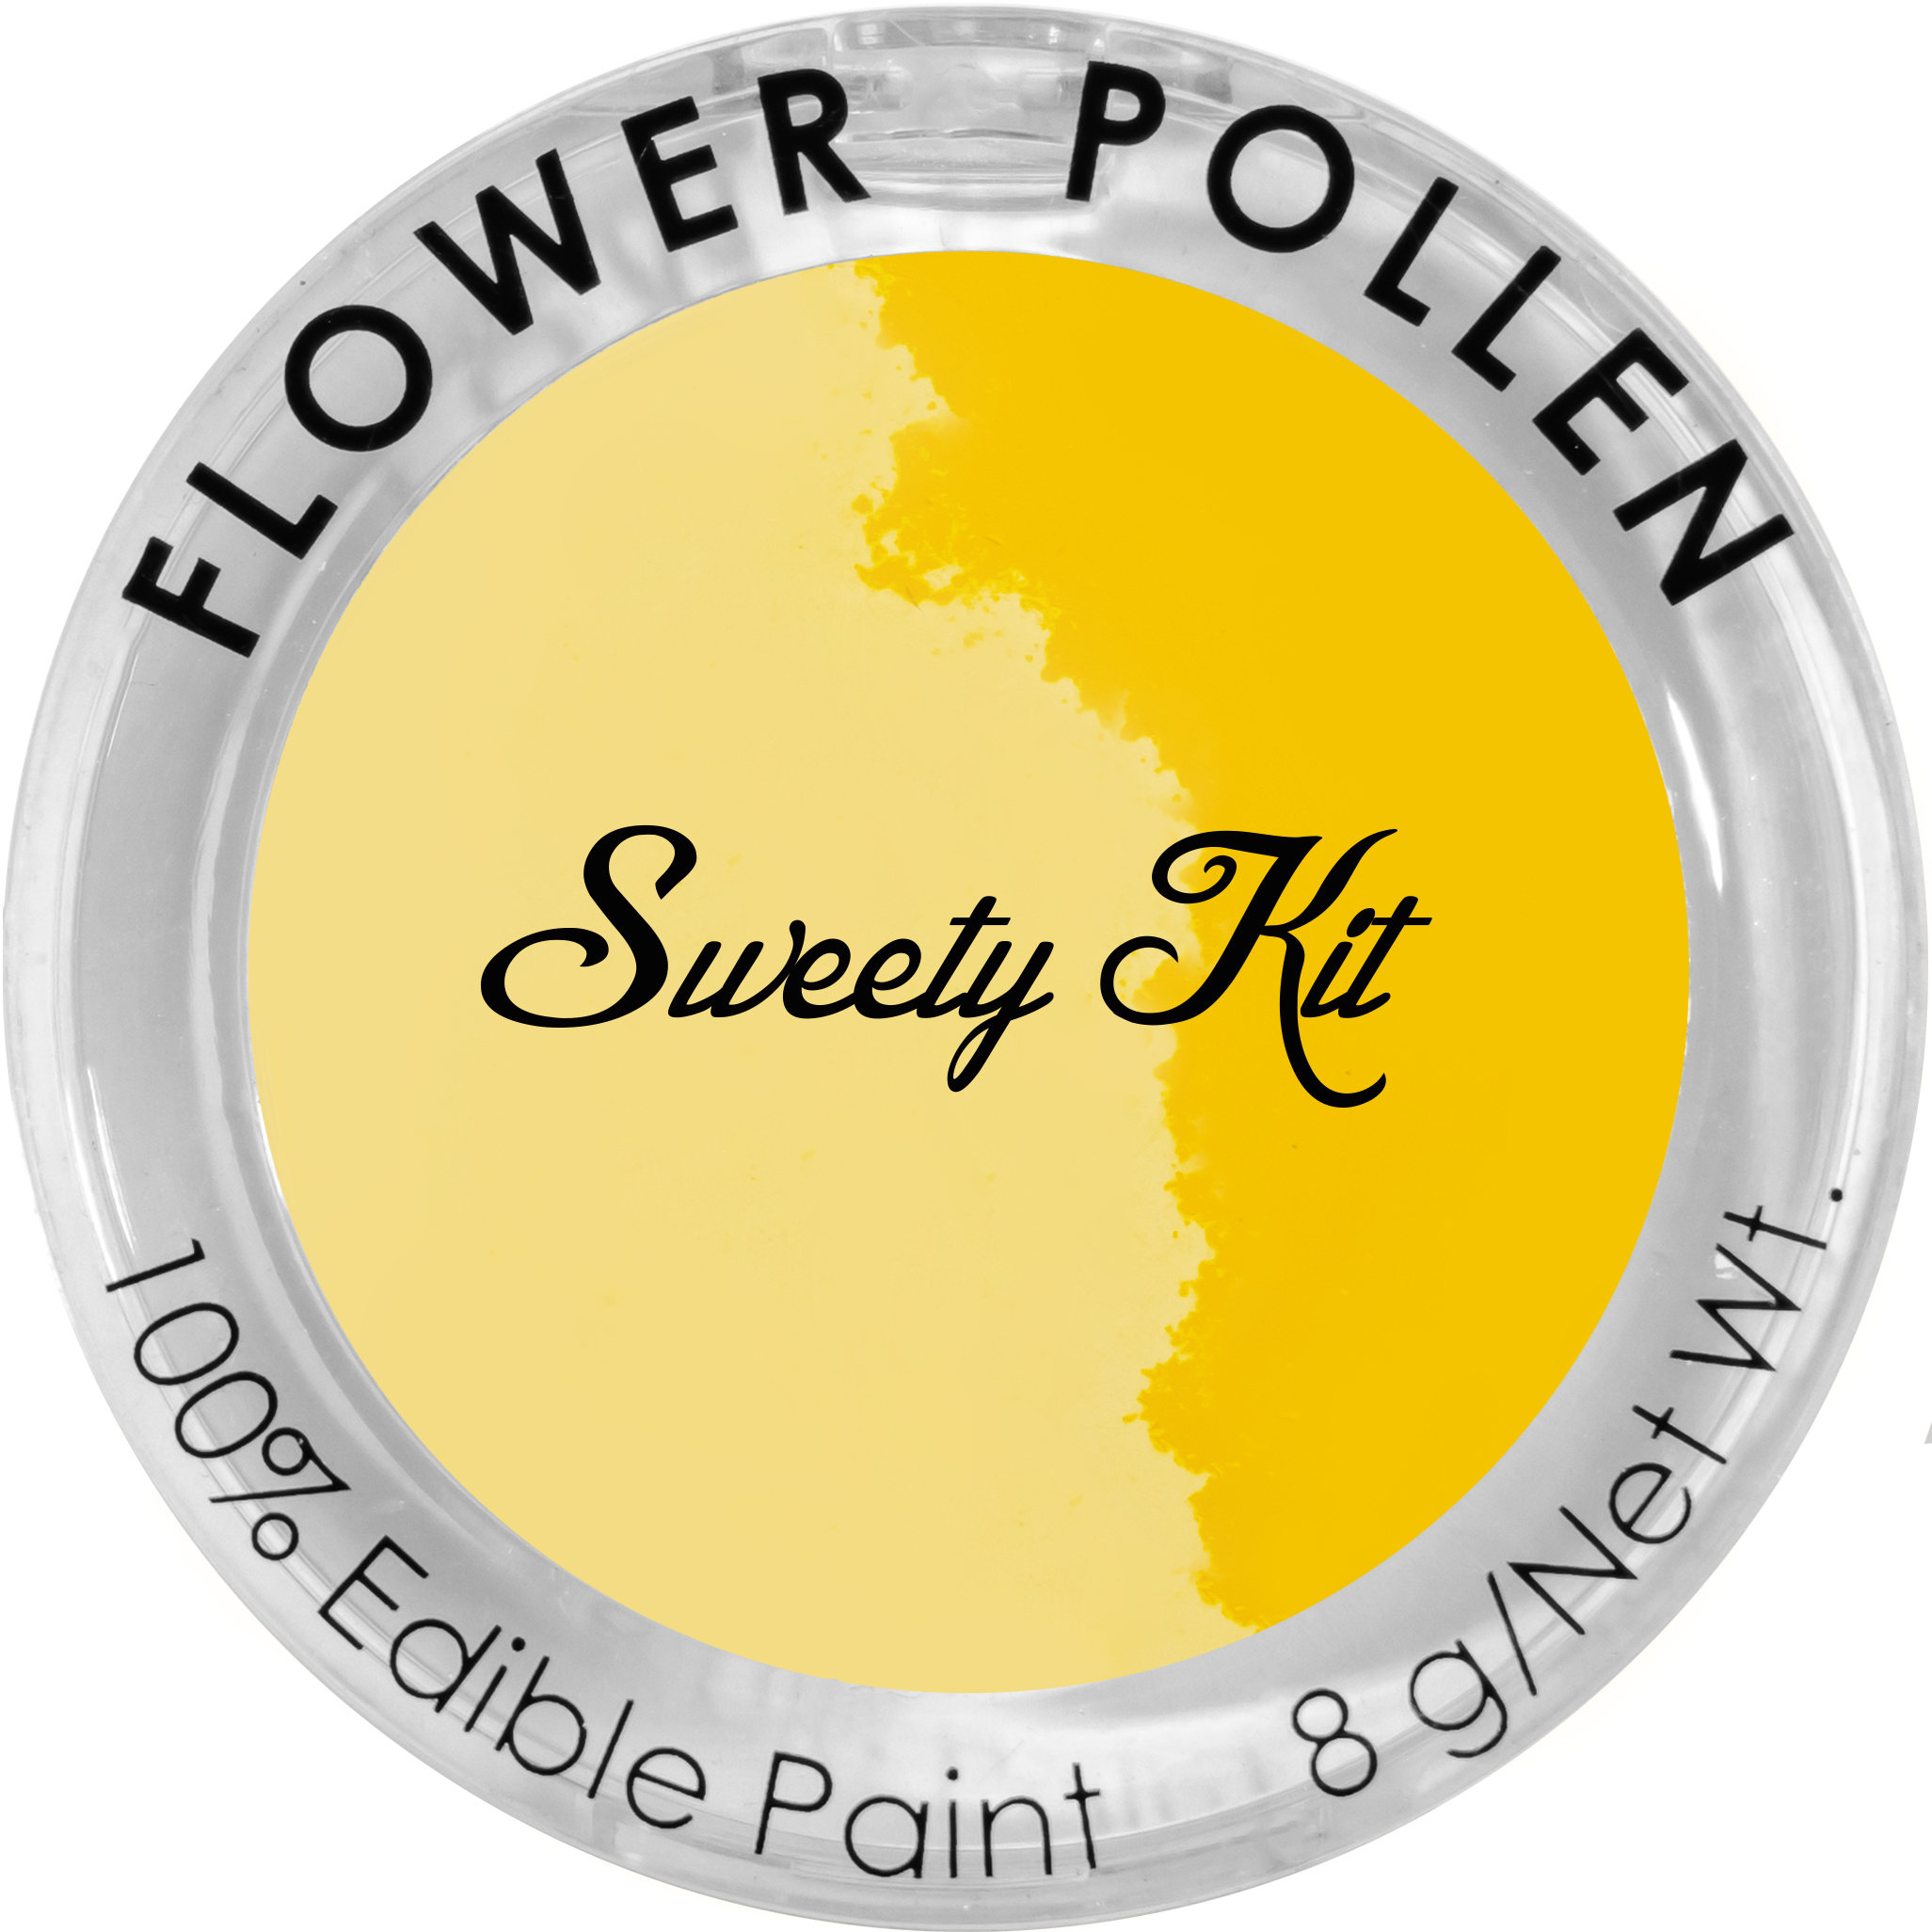 Пыльца кондитерская. Кондитерская Цветочная пыльца «Flower pollen», 8 гр. Sweety Kit пыльца. Озон пыльца Цветочная кондитерская.